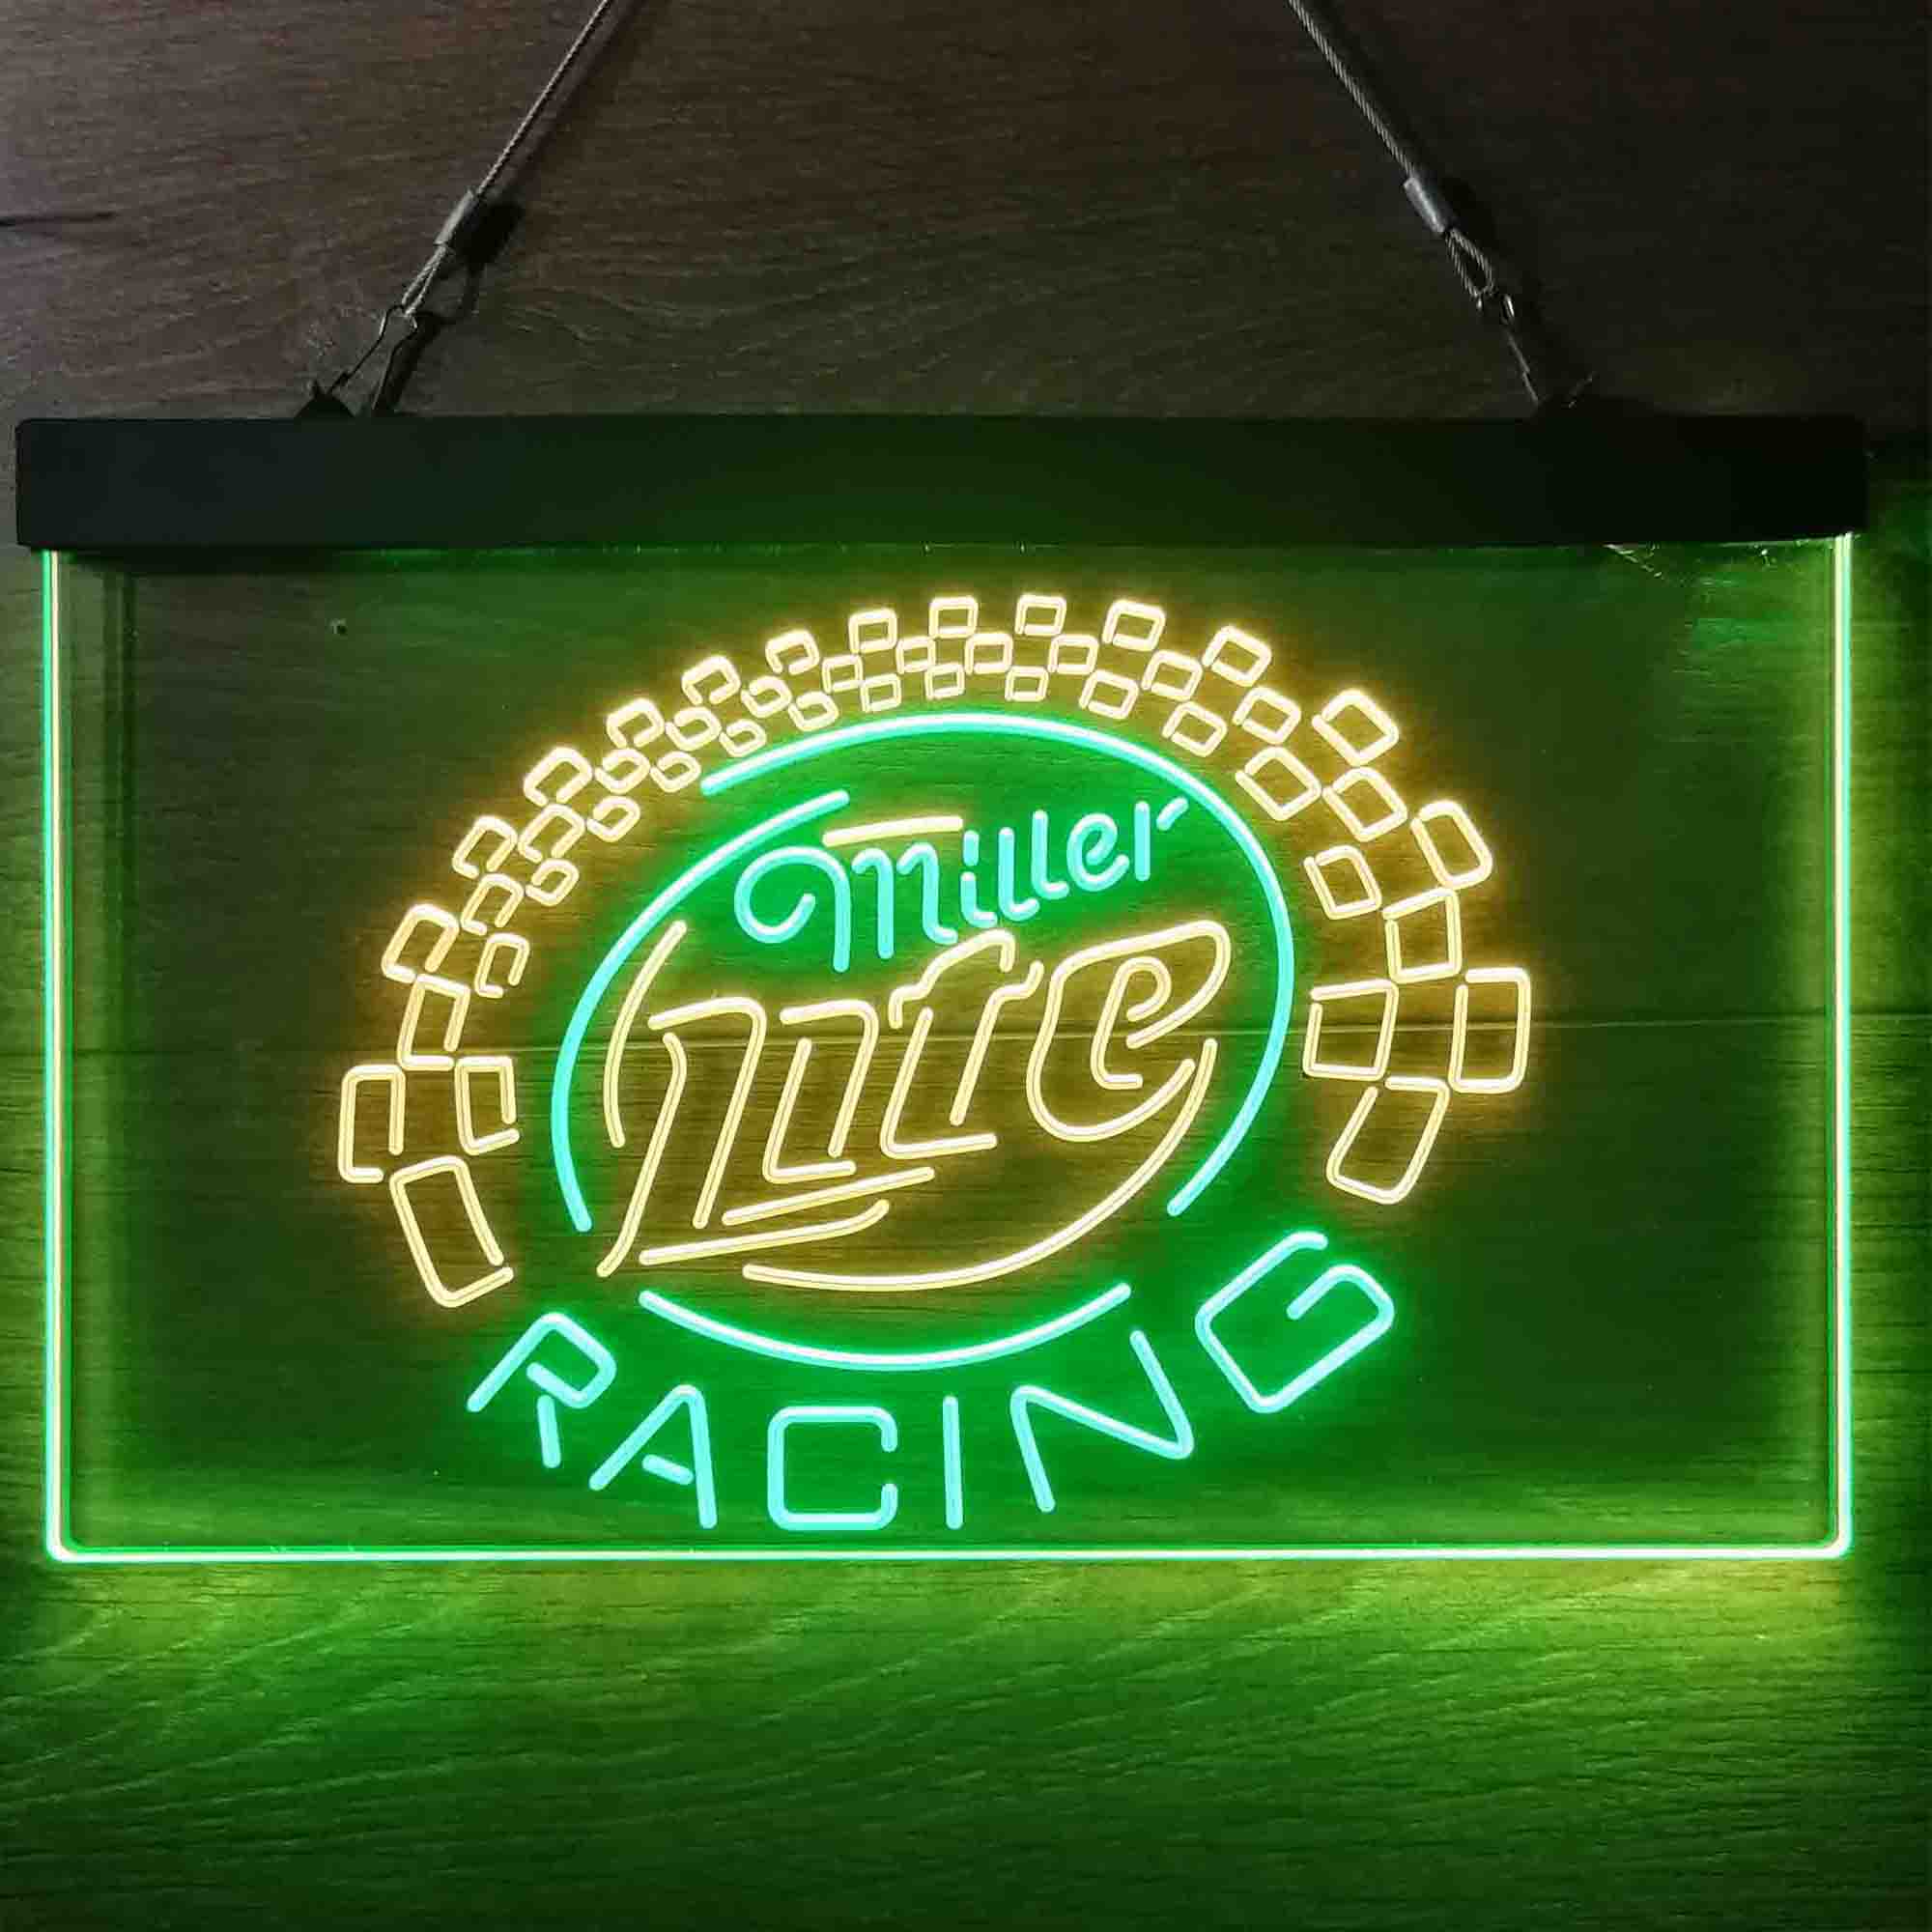 Miller Lite Racing Car LED Neon Sign